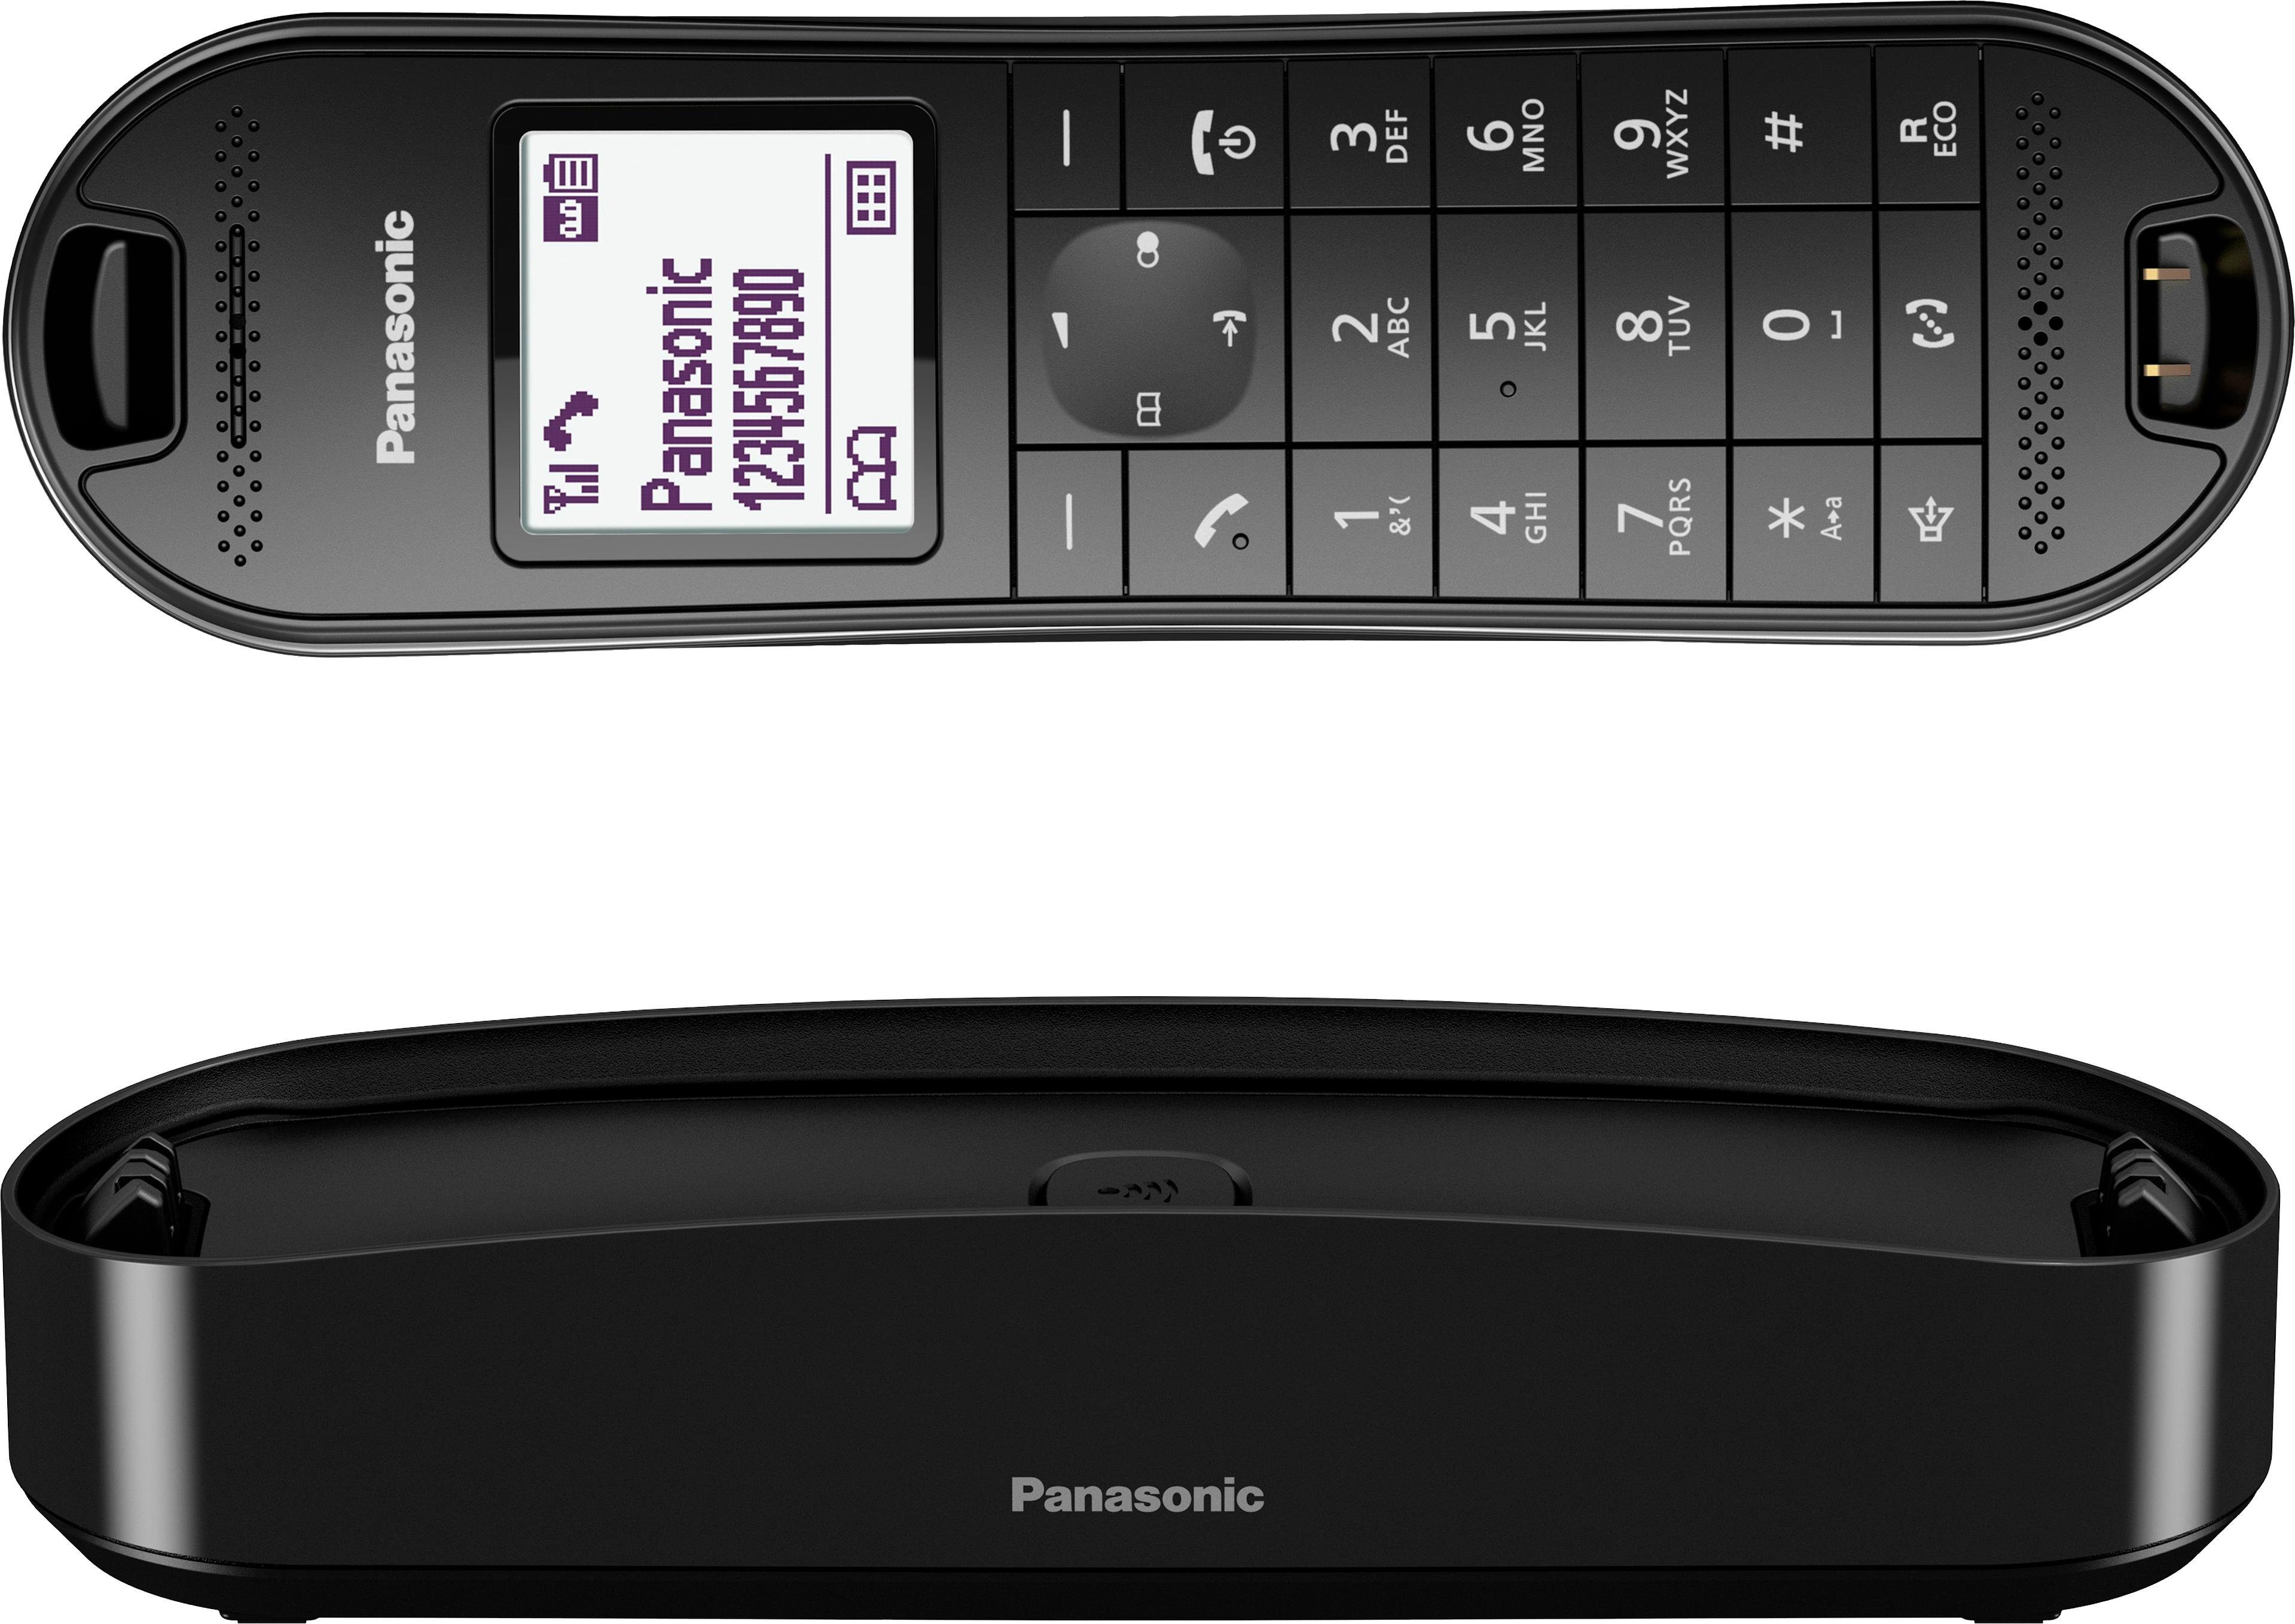 KX-TGK320 cm 3,8 Grafikdisplay Weckfunktion, DECT-Telefon 1, Panasonic Freisprechen), Anrufbeantworter, (1,5\